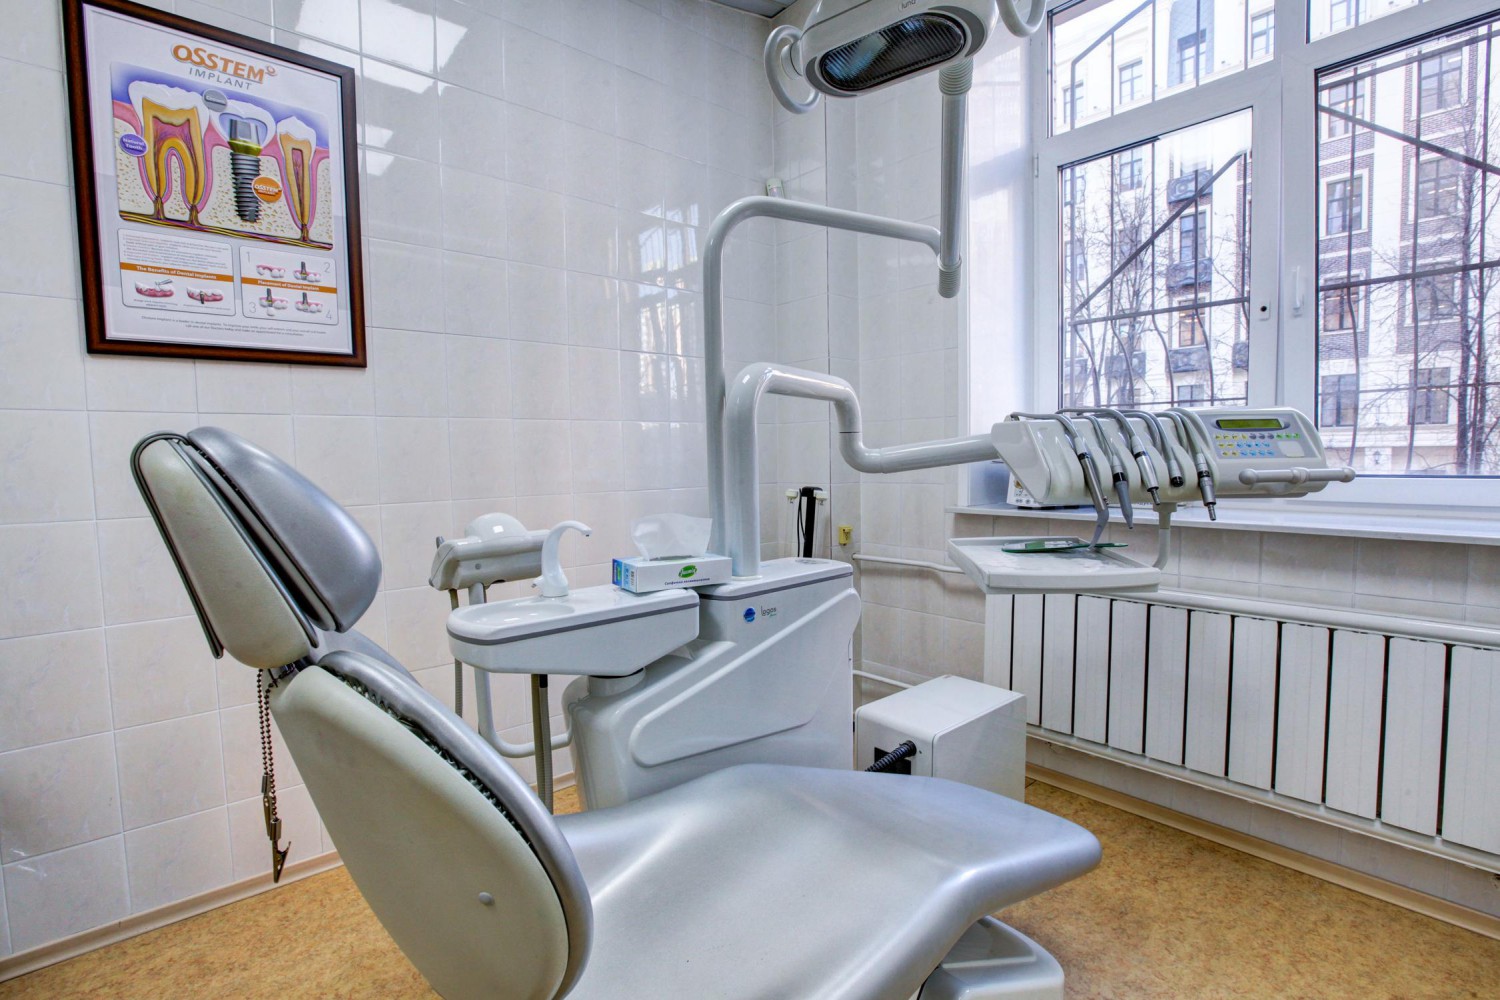 Стоматология Dental Dream